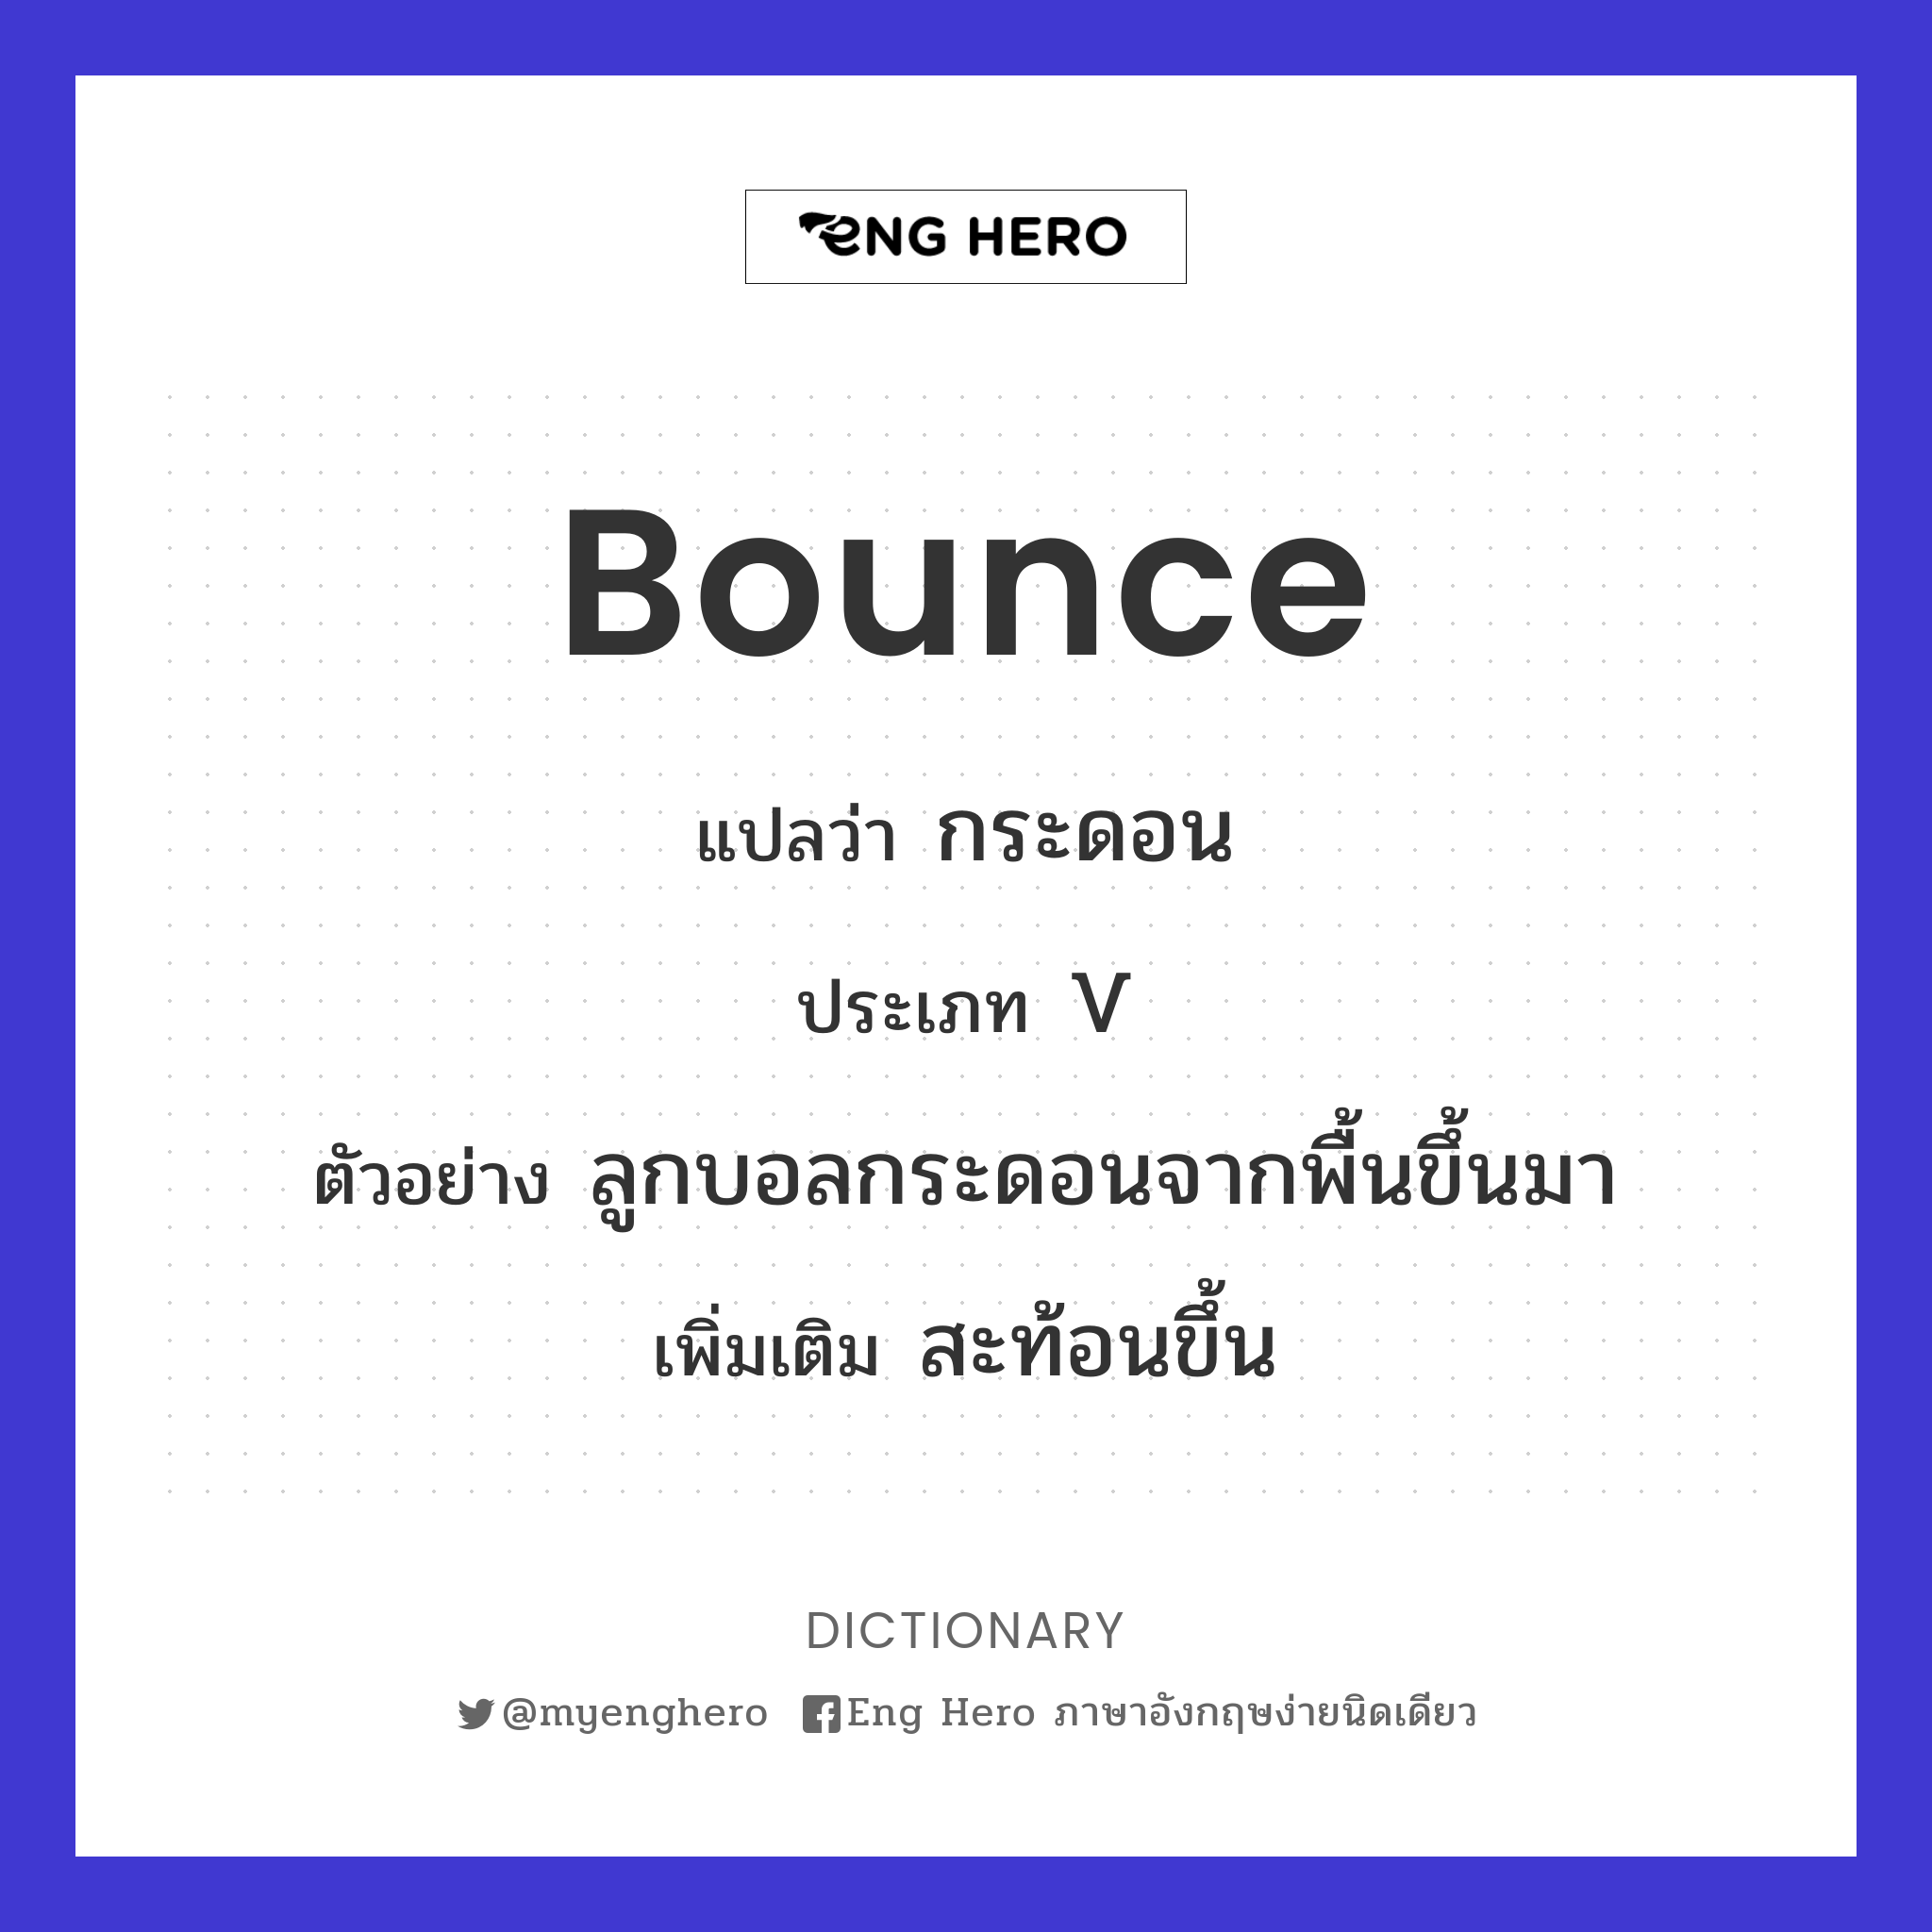 bounce